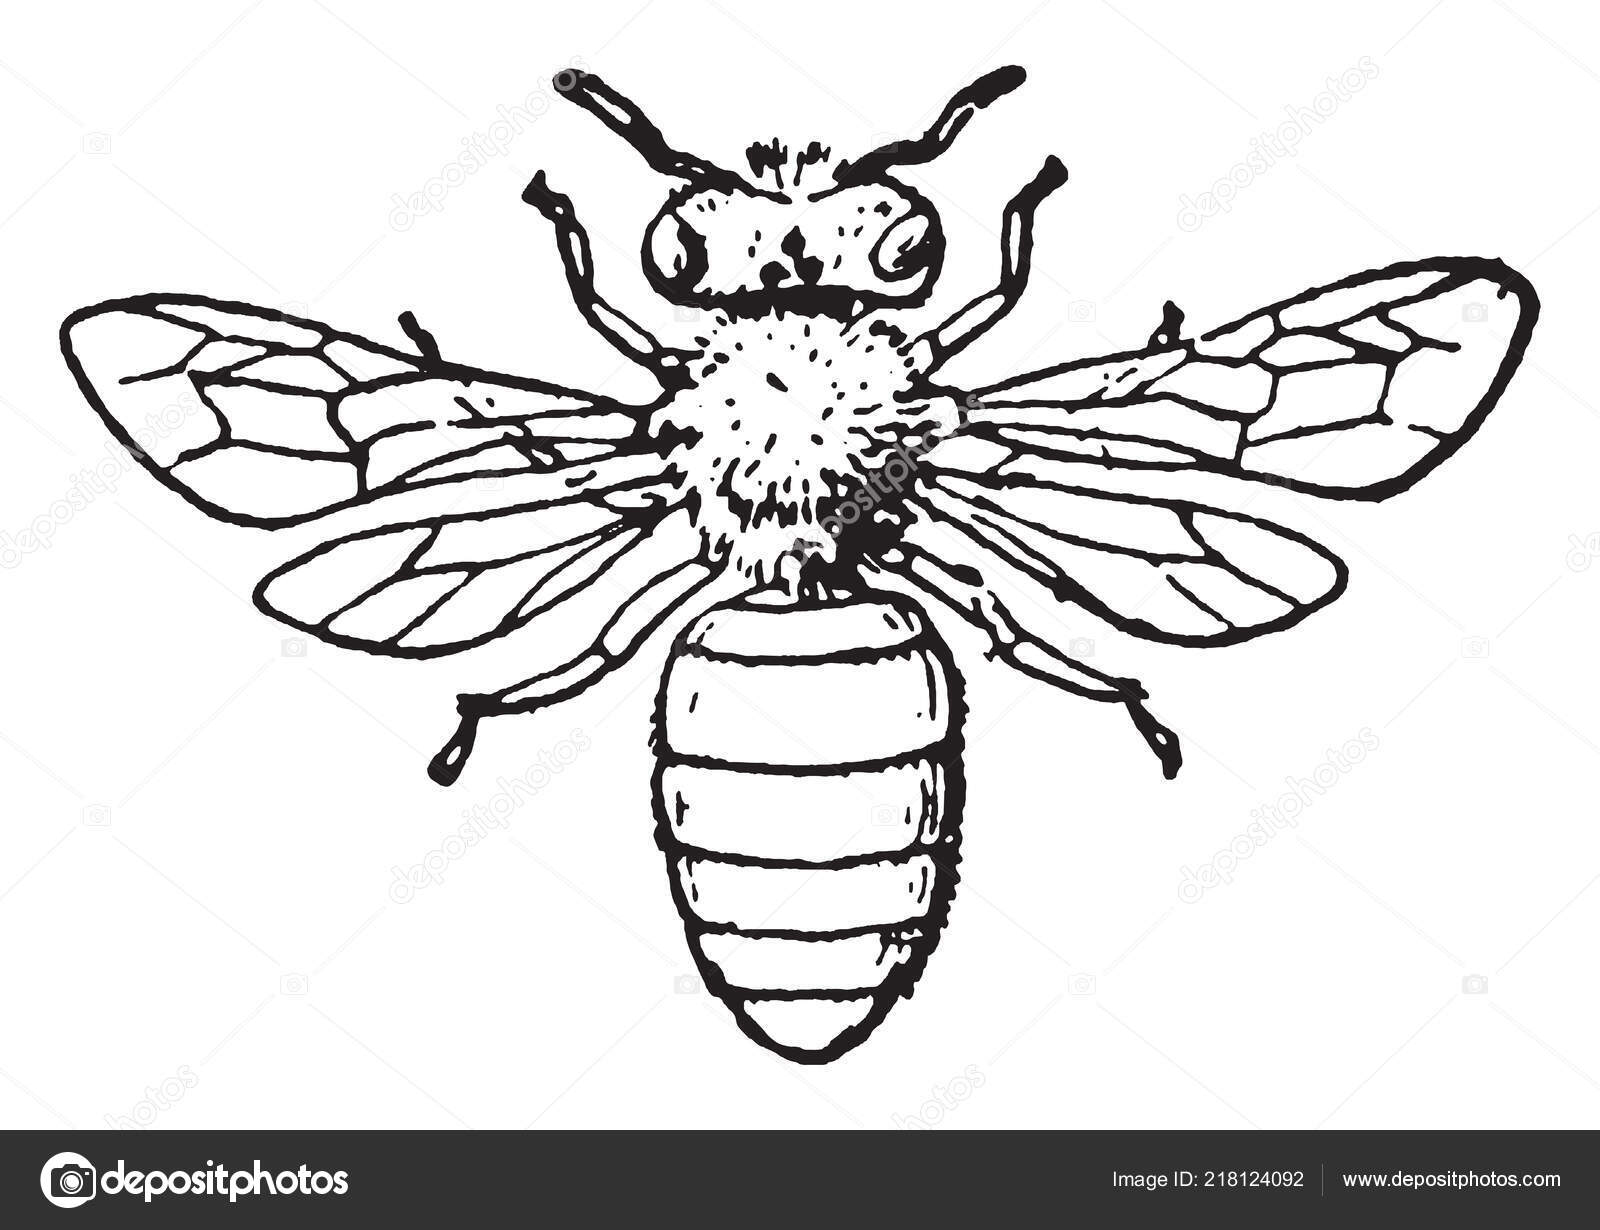 Engraving Illustration Of Honey Bee Stock Illustration - Download